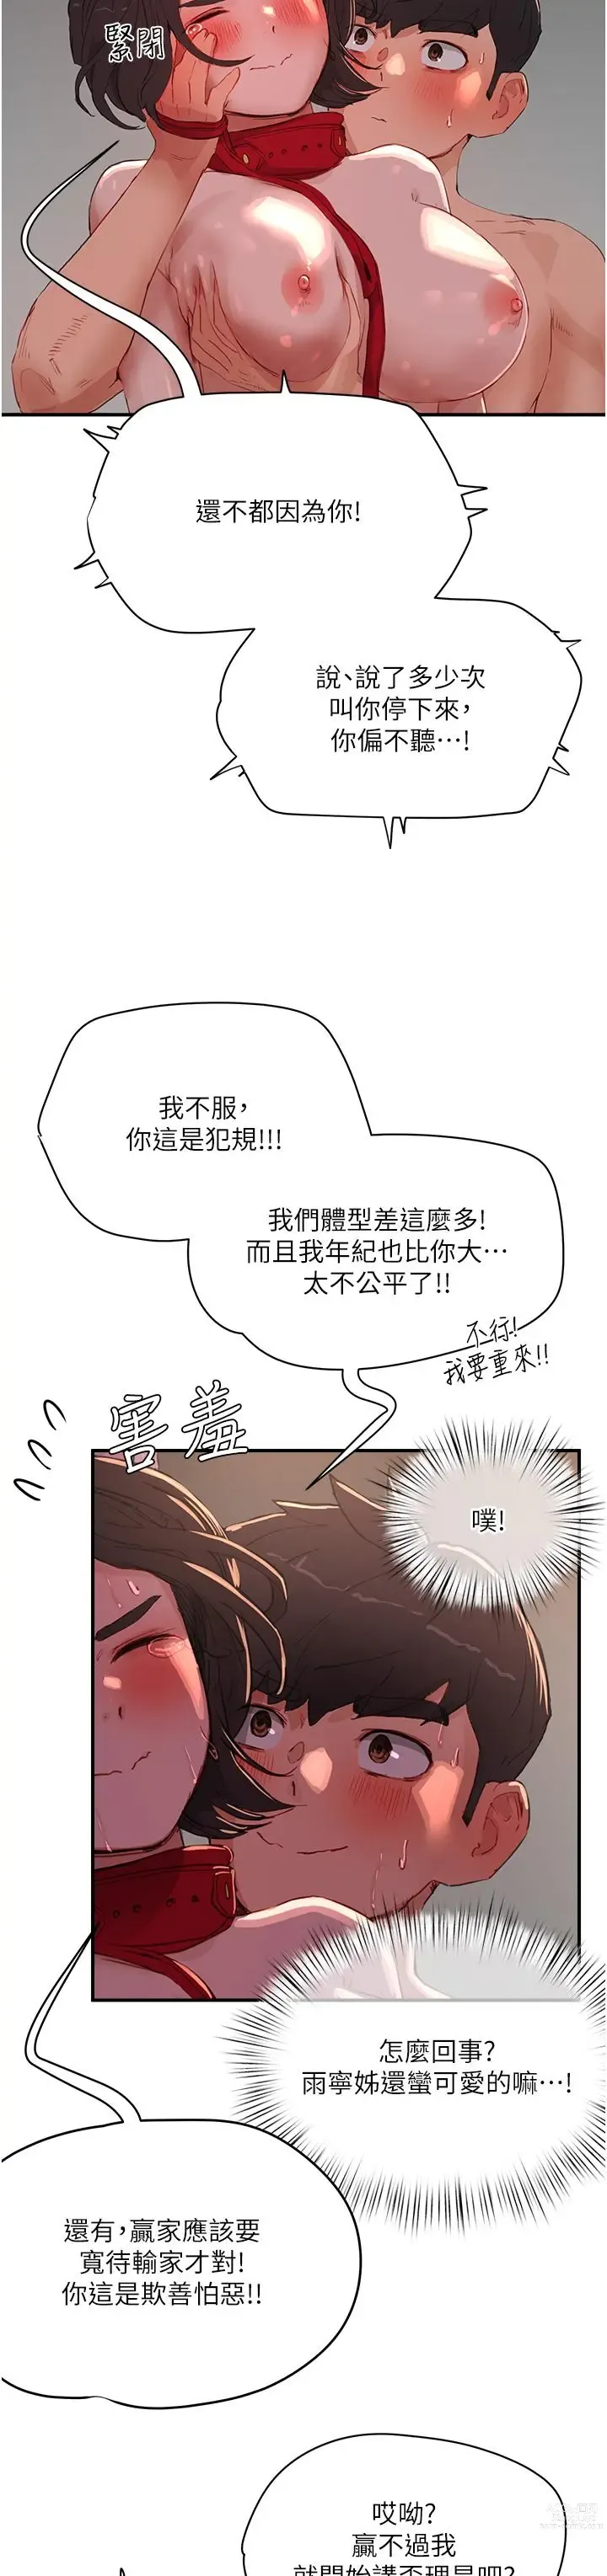 Page 6 of manga 夏日深处/Summer of Love 61-76